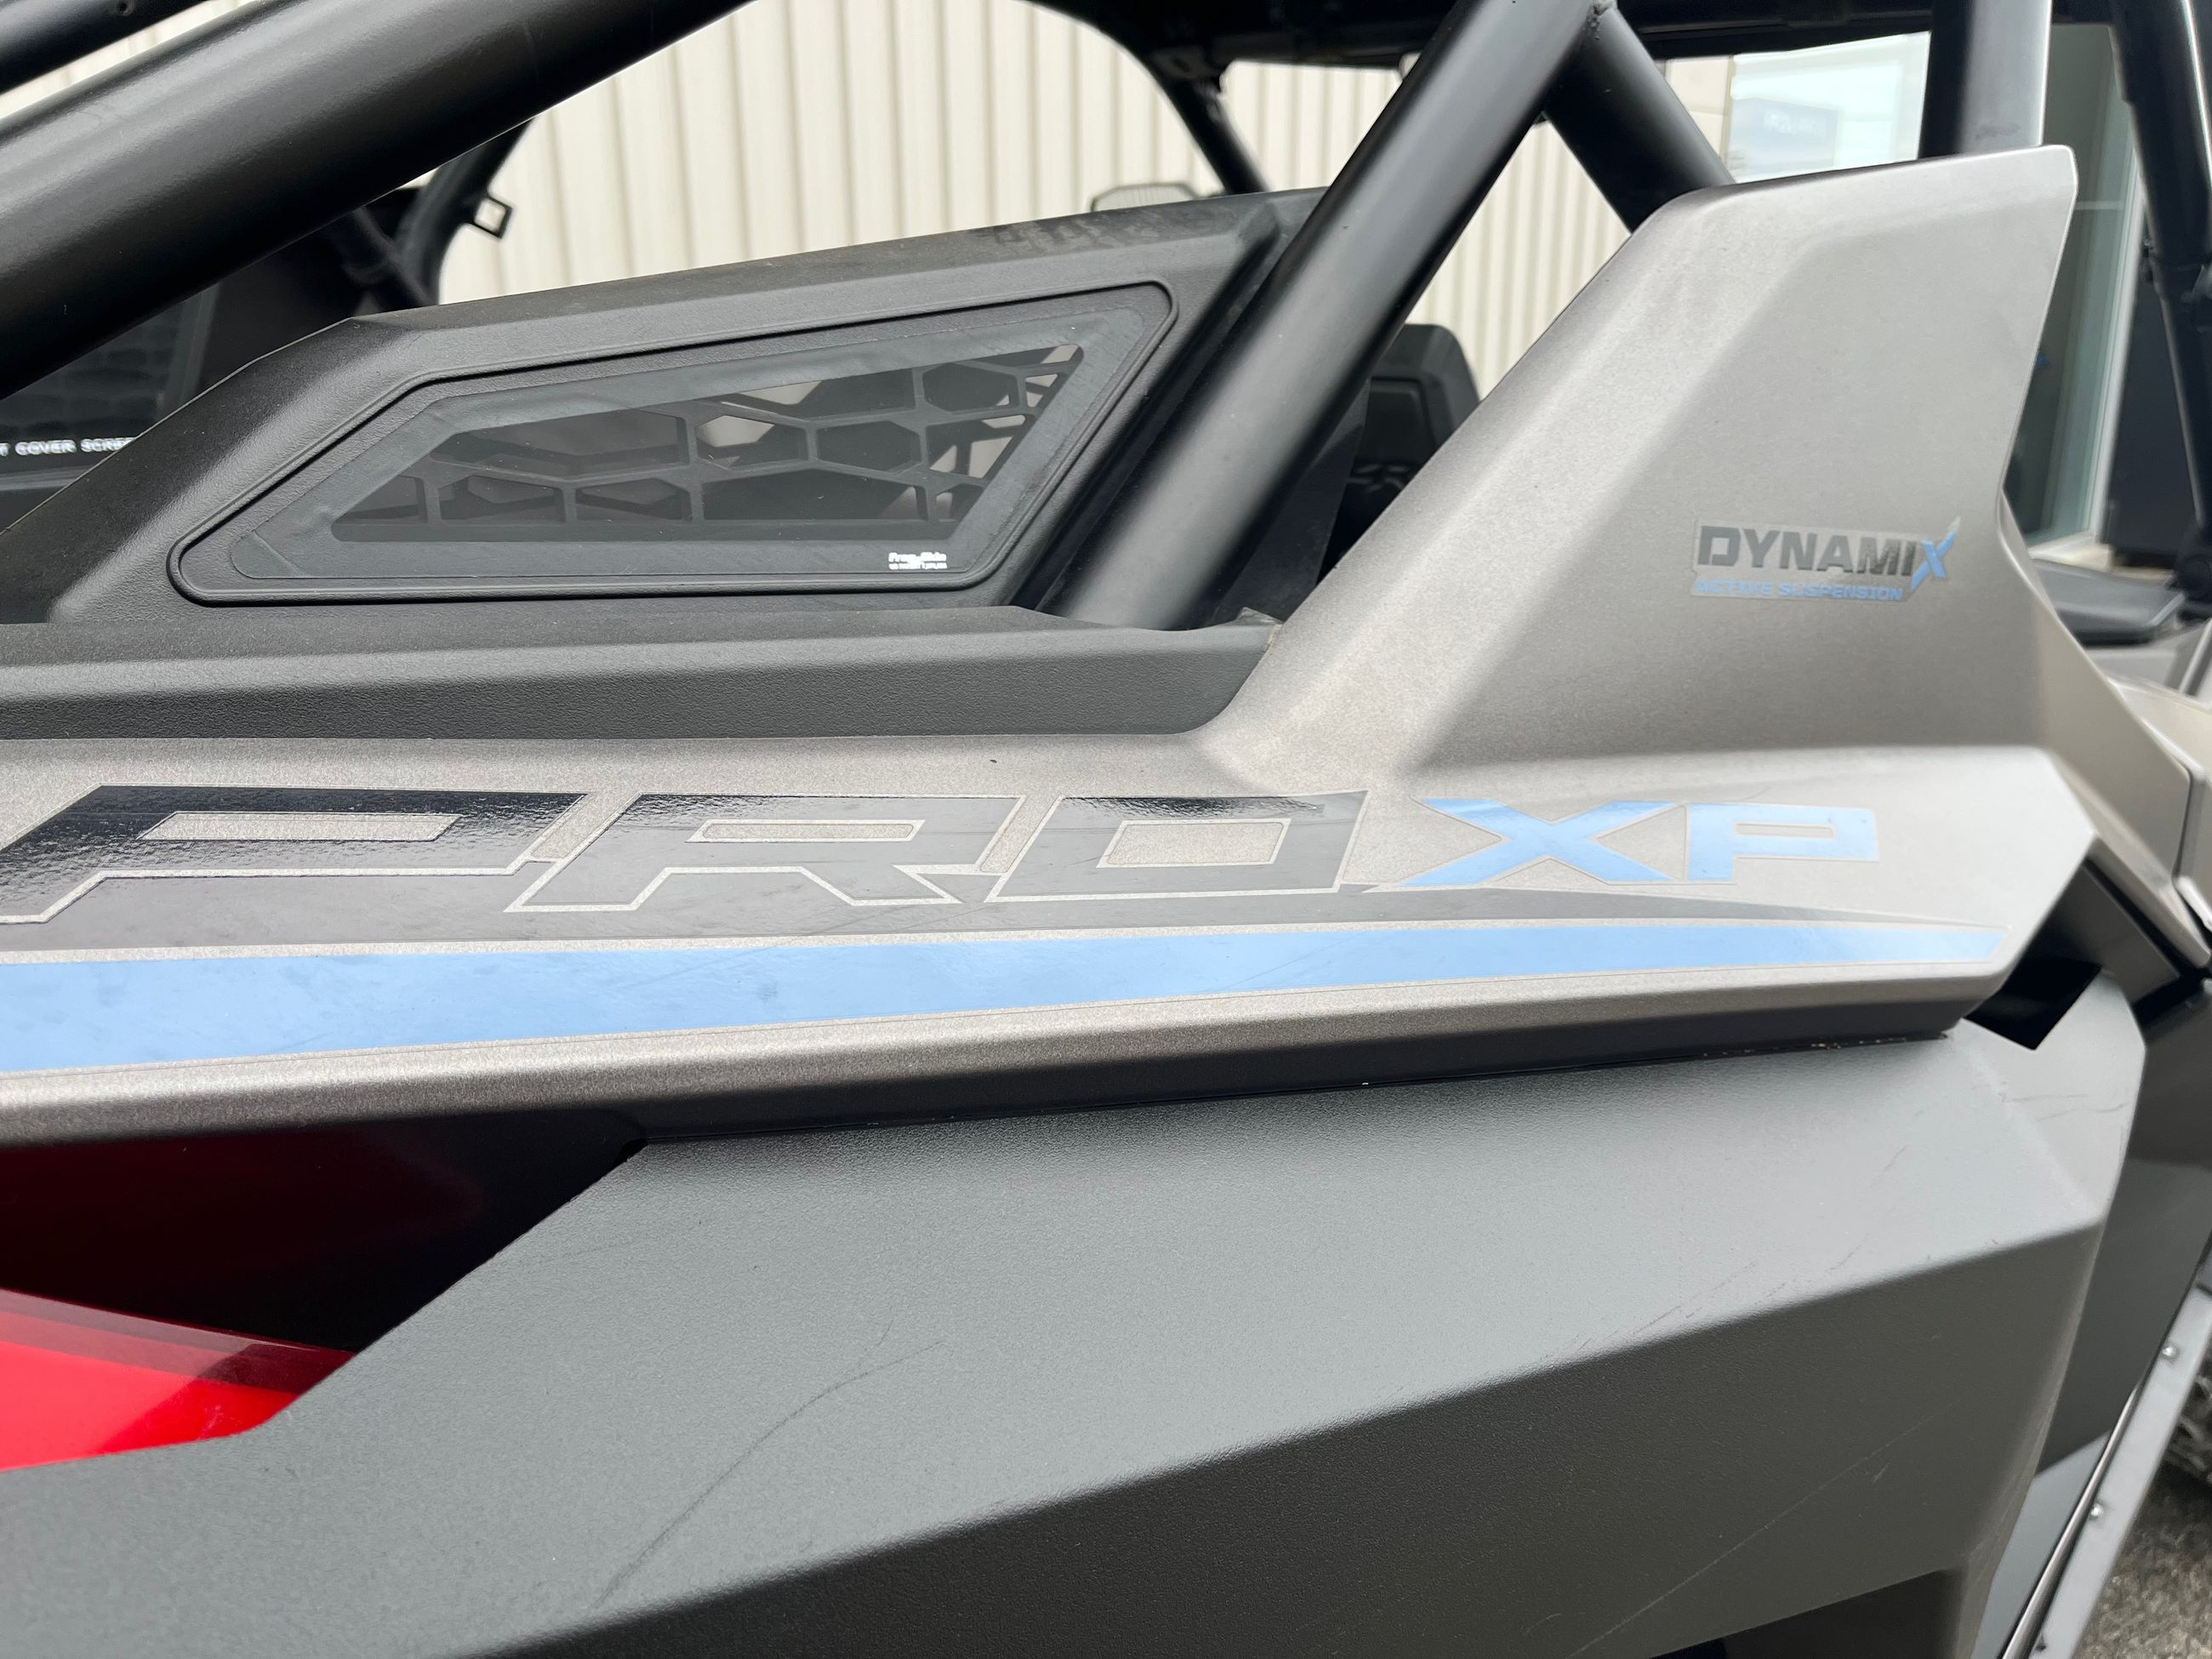 Polaris RZR Pro XP Ultimate Suspension Dynamix Turbo 181Hp 2021